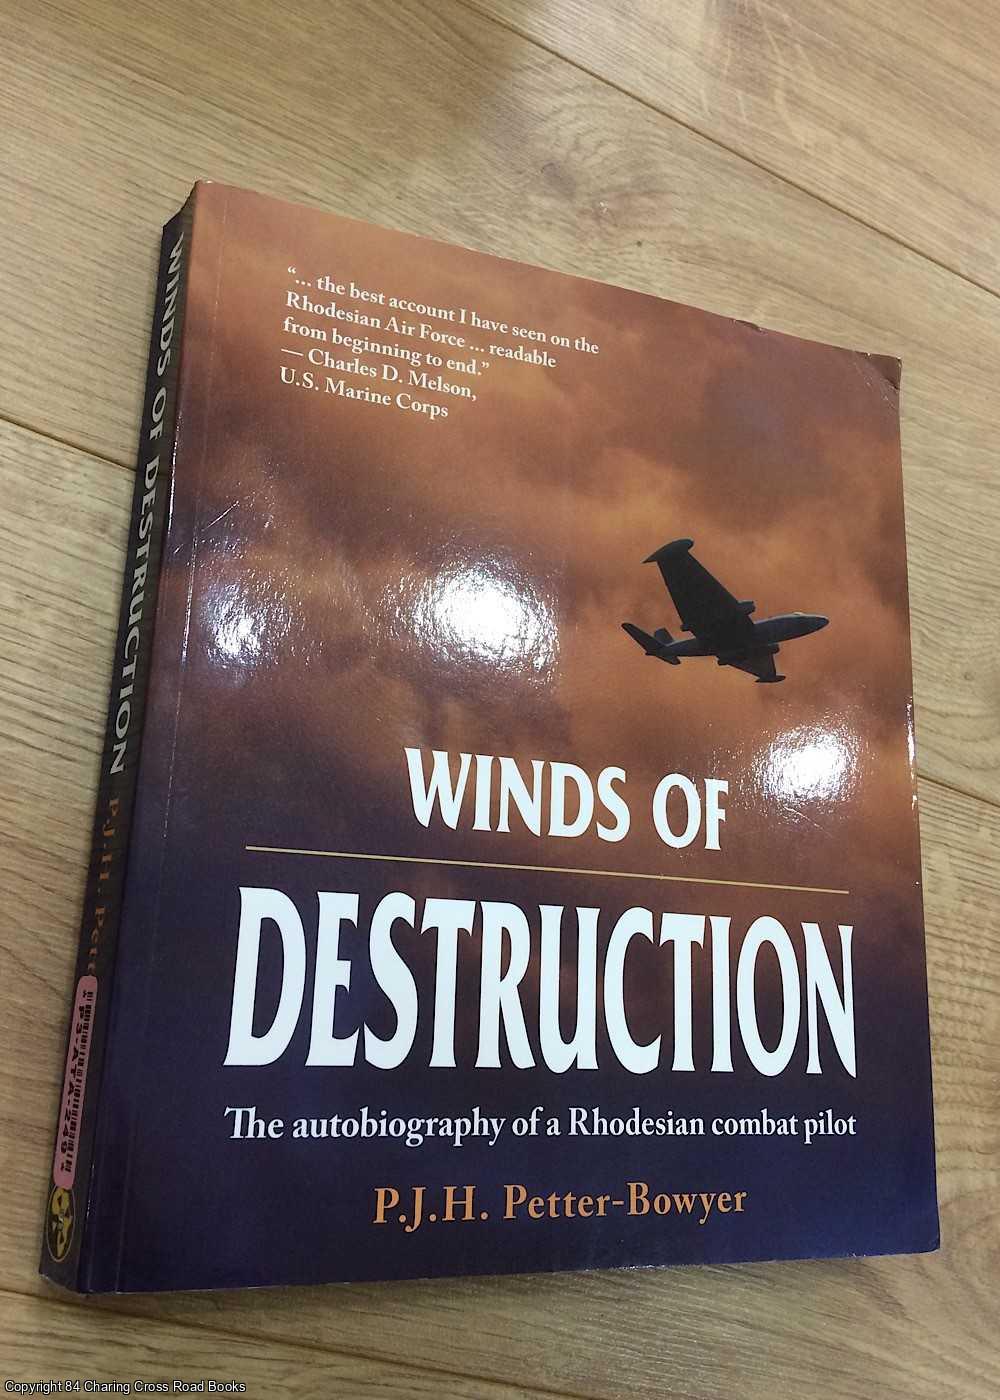 P J H Petter-Bowyer - Winds of Destruction: The Autobiography of a Rhodesian Combat Pilot